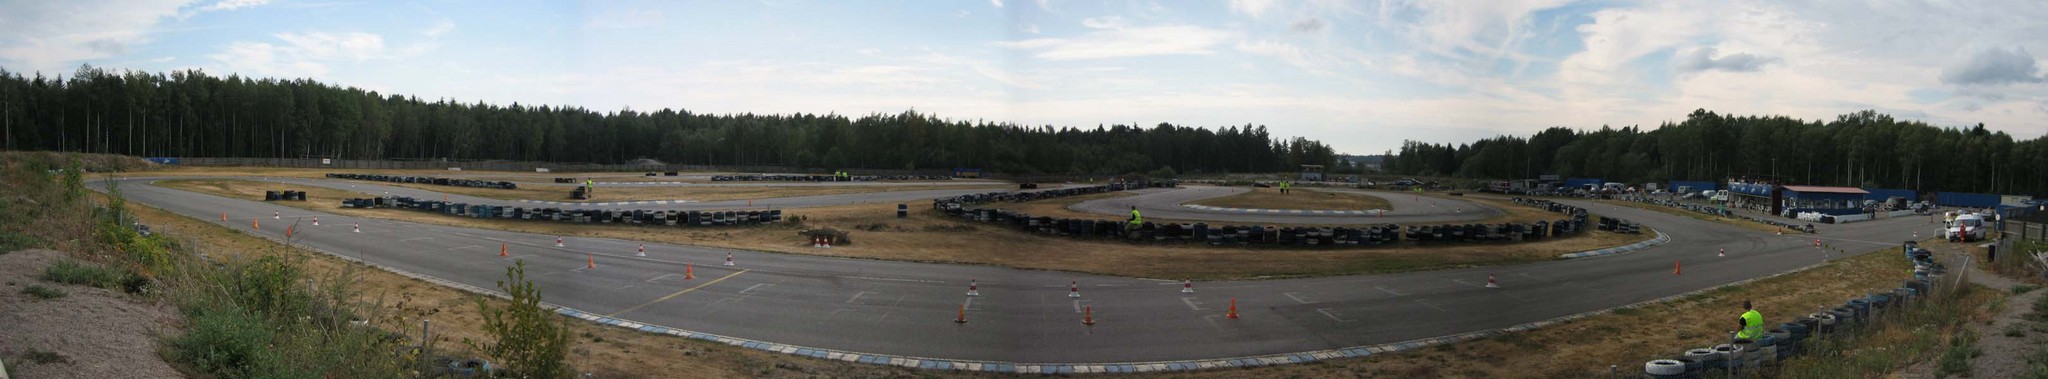 Helsinki-Malmi karting track